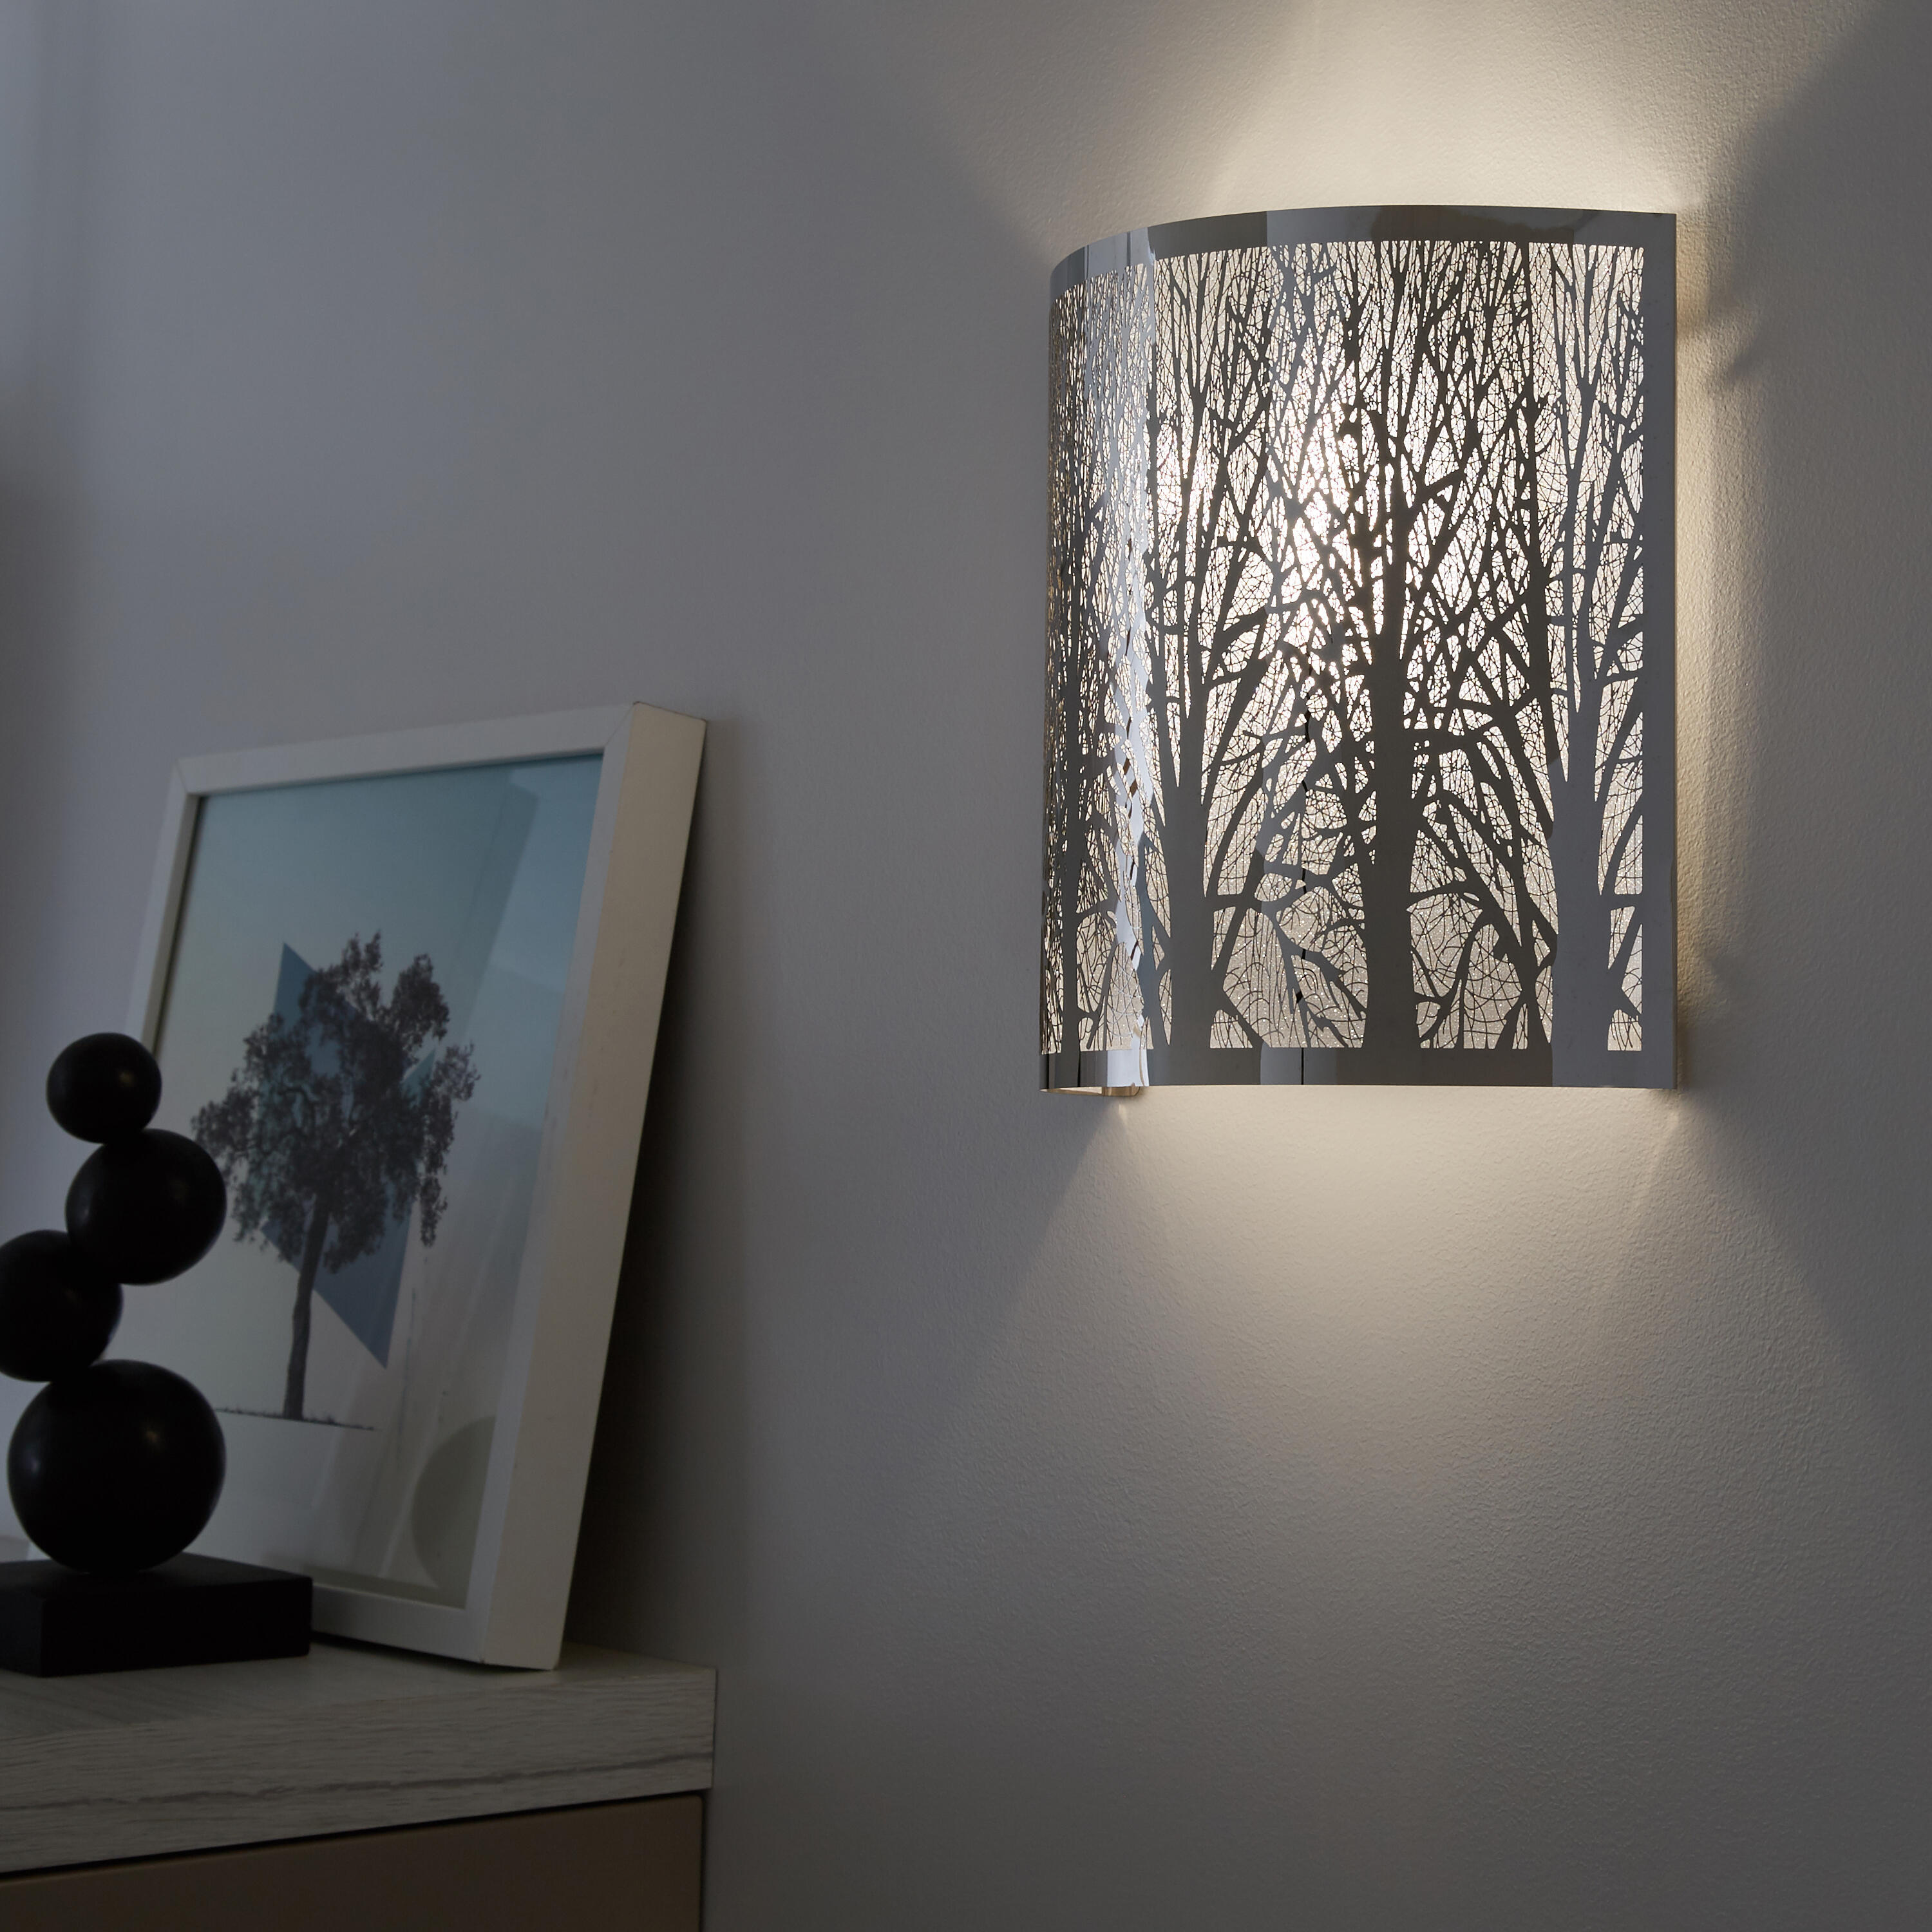 Applique Forest grigio / argento, in metallo, 23x23 cm, INSPIRE - 5